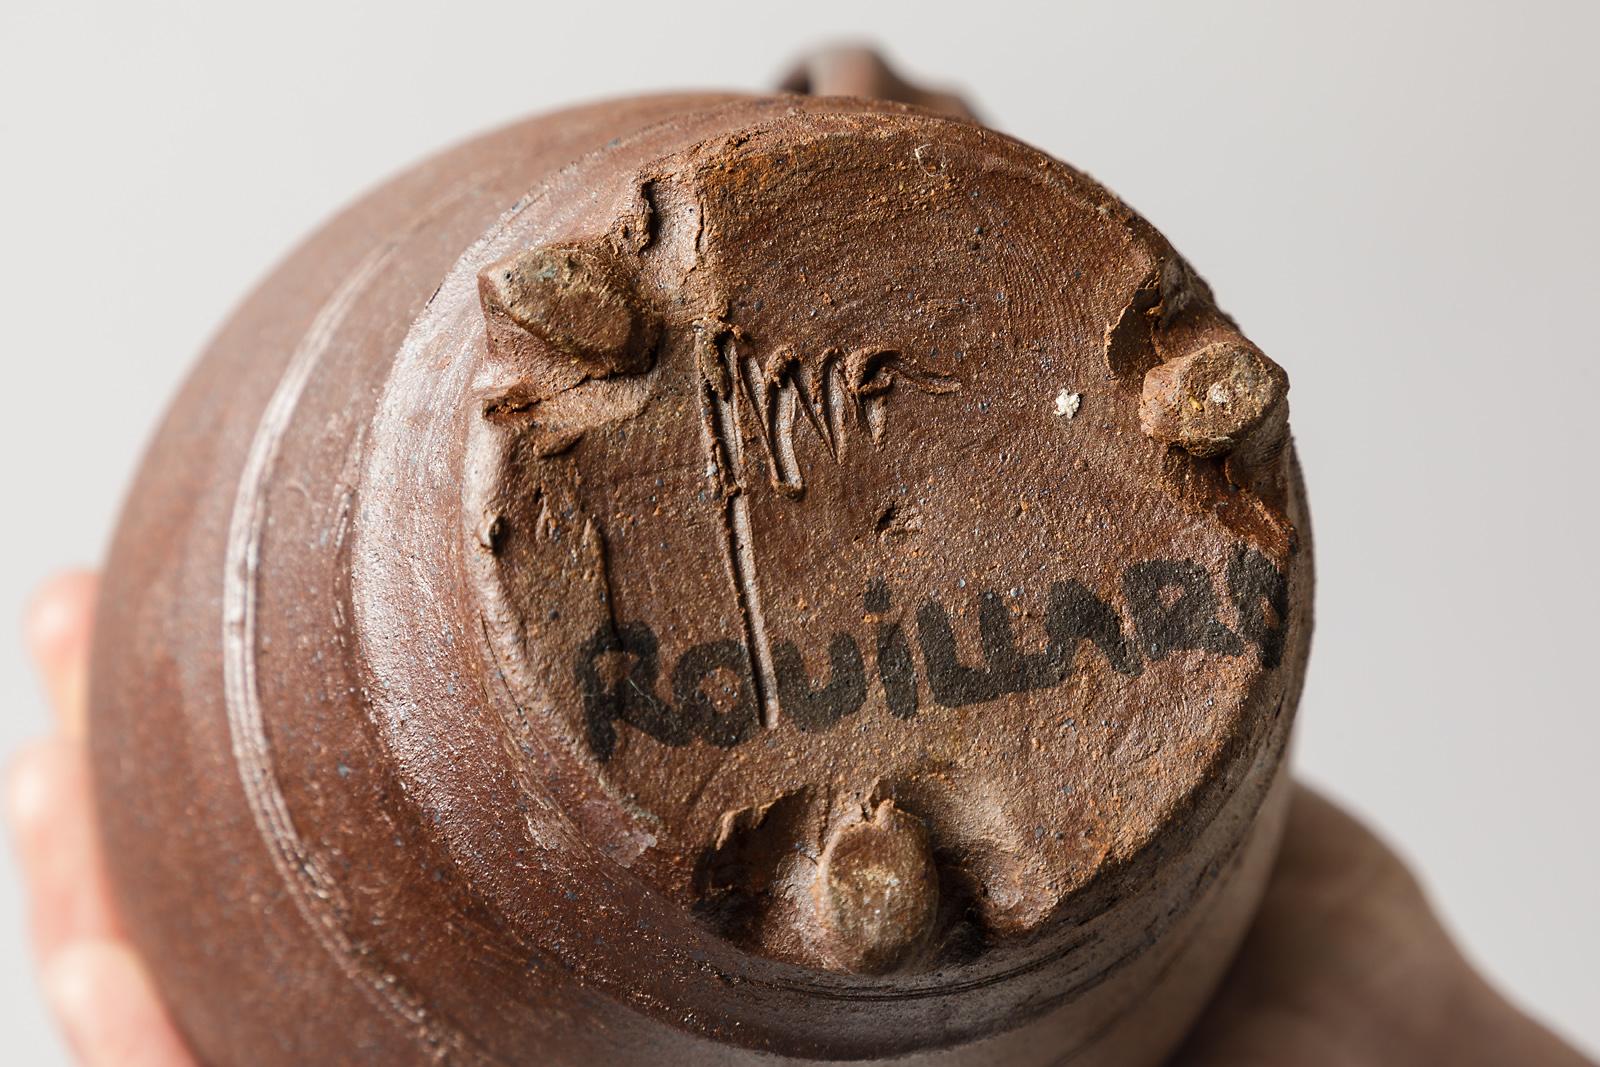 20th Century Brown Mid Century Rustic Stoneware Ceramic Pitcher by Rouillard 1975 La Borne For Sale